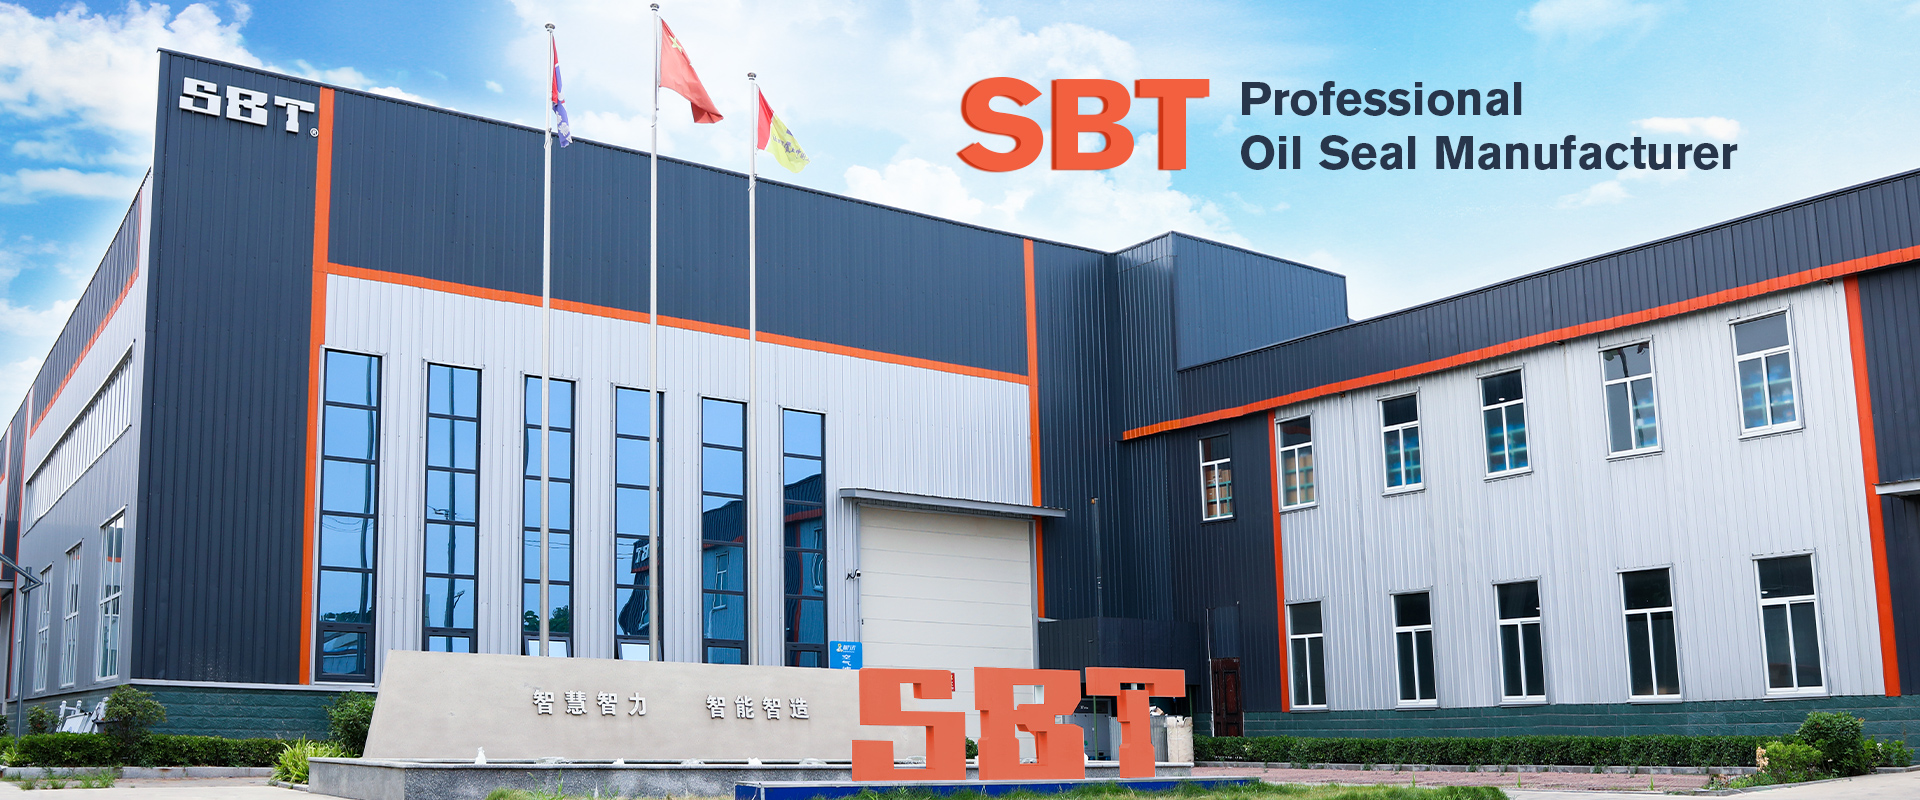 Xingtai Subote Oil Seal Manufacturing Co., Ltd.